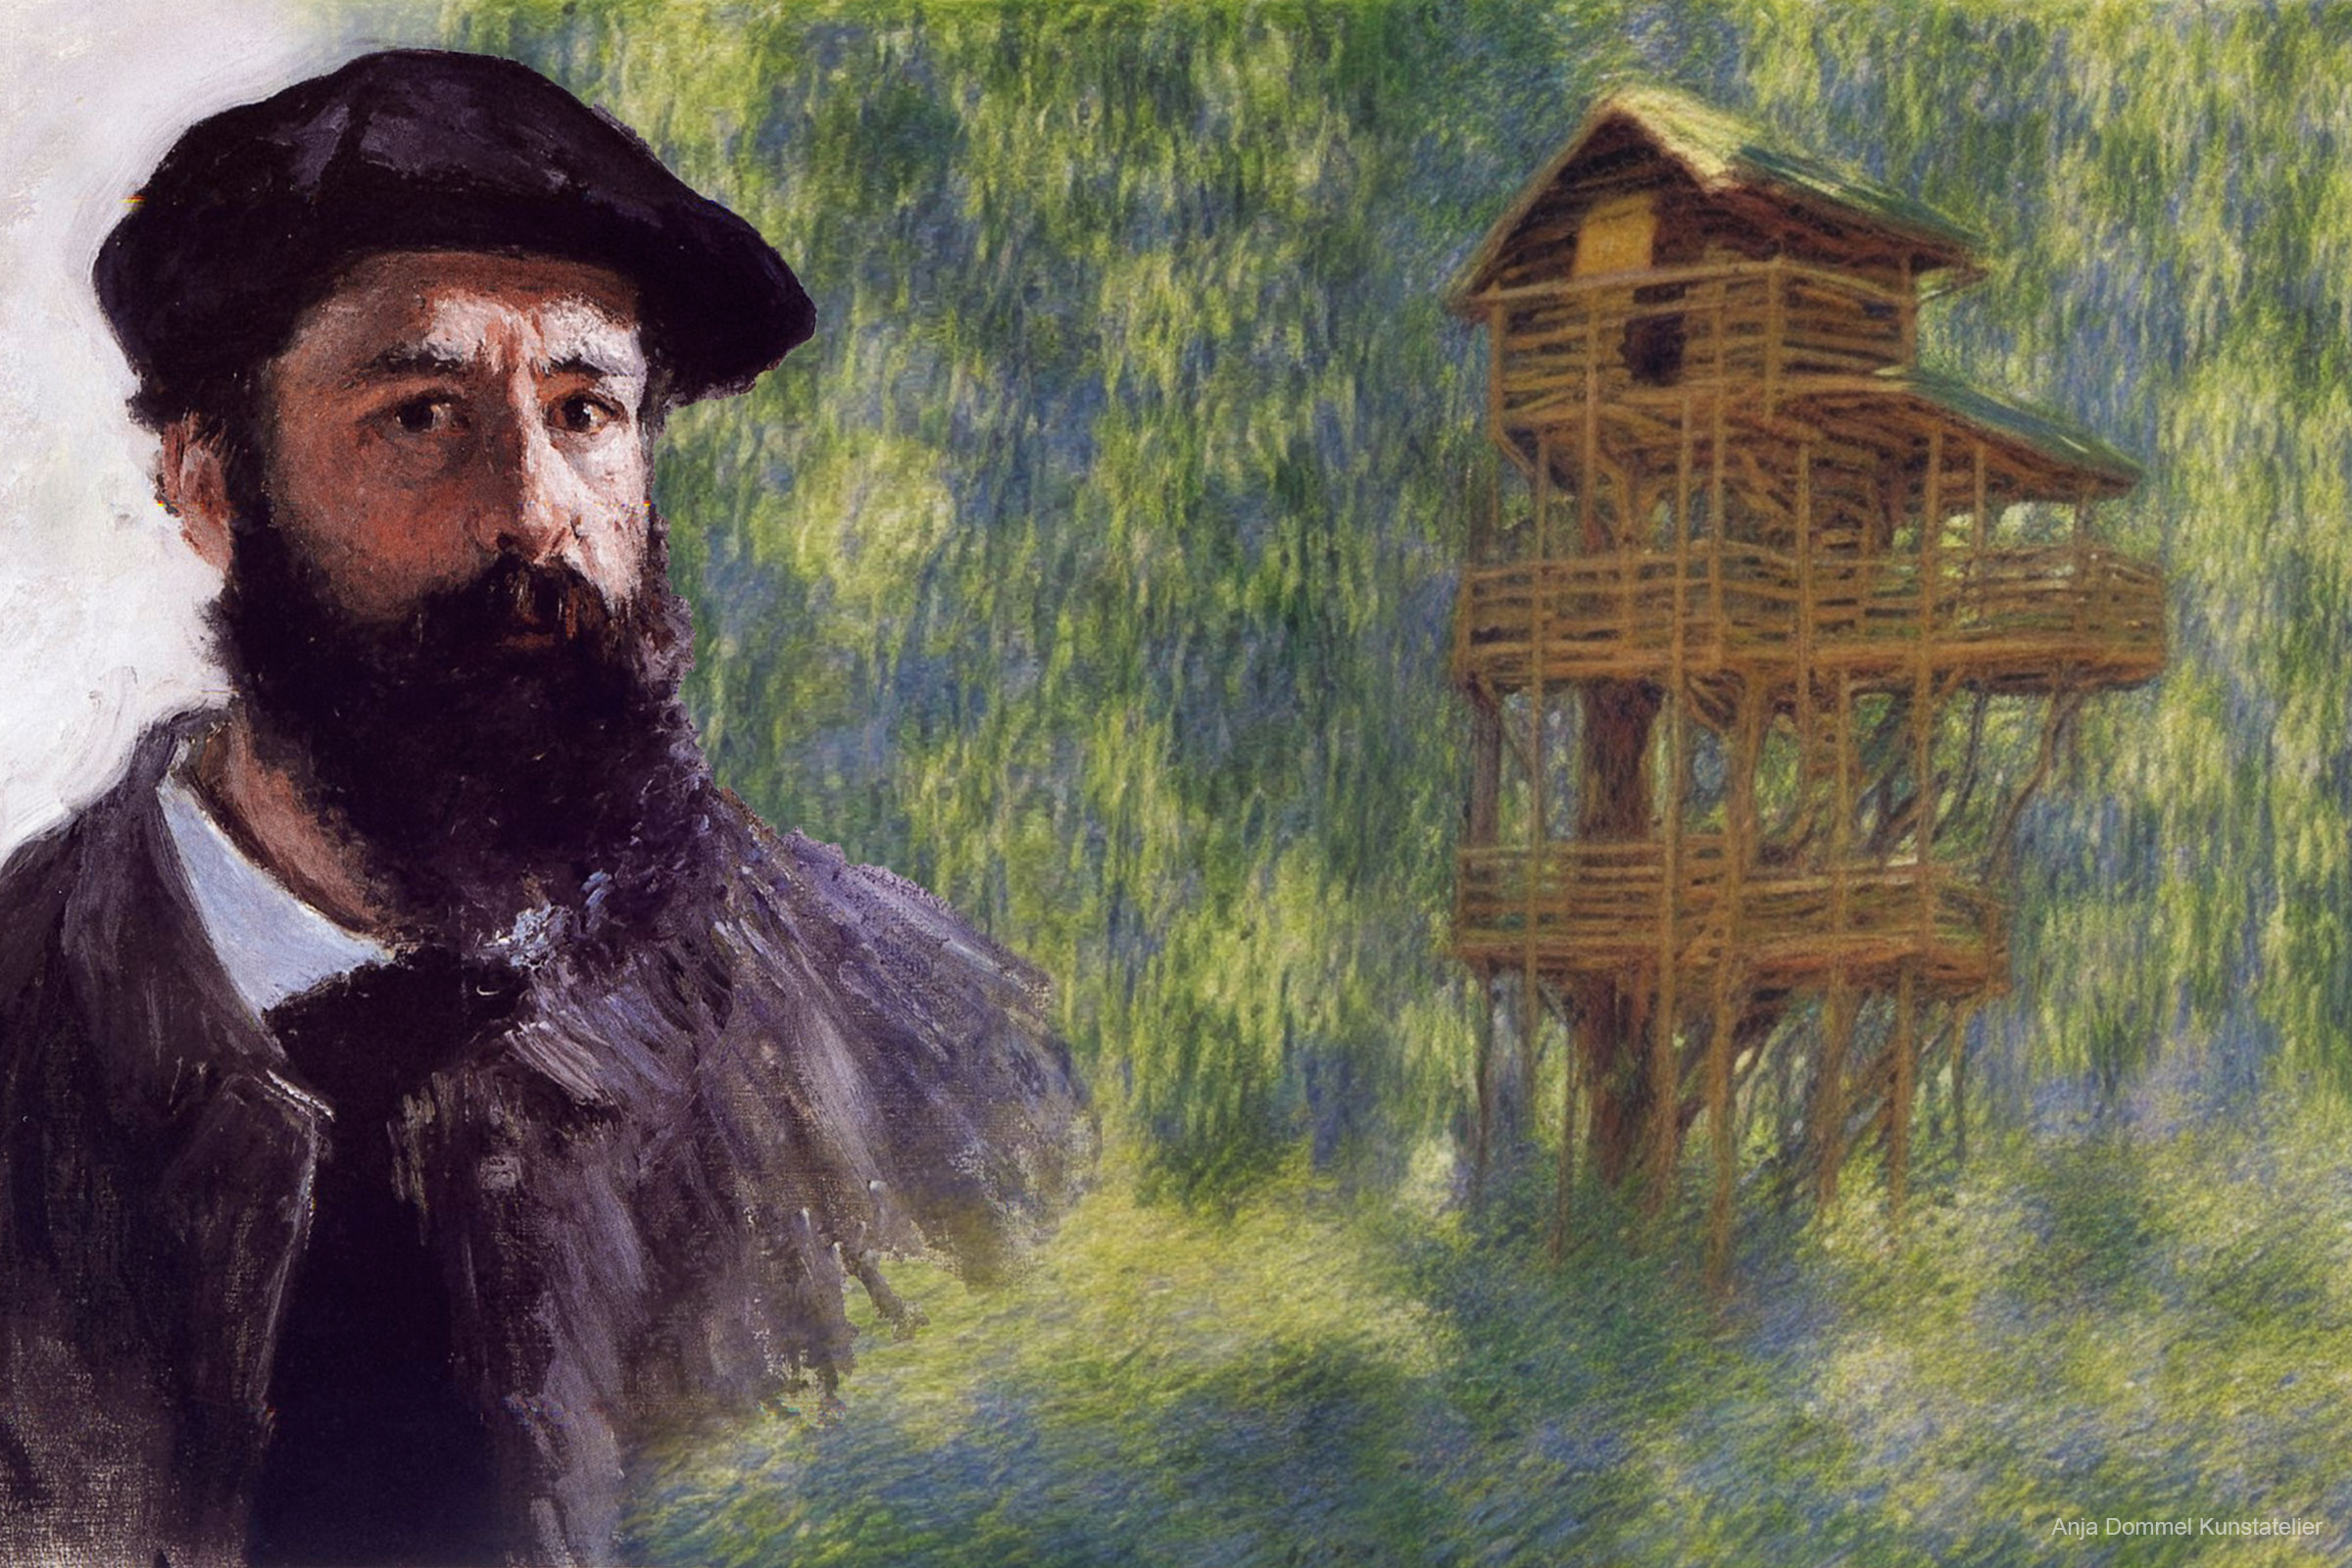 Anja Dommel, Claude Monet, Baumhaus, KI Kunst, http://www.monet.galeria.lap.pl/, Public Domain, https://commons.wikimedia.org/w/index.php?curid=5608086